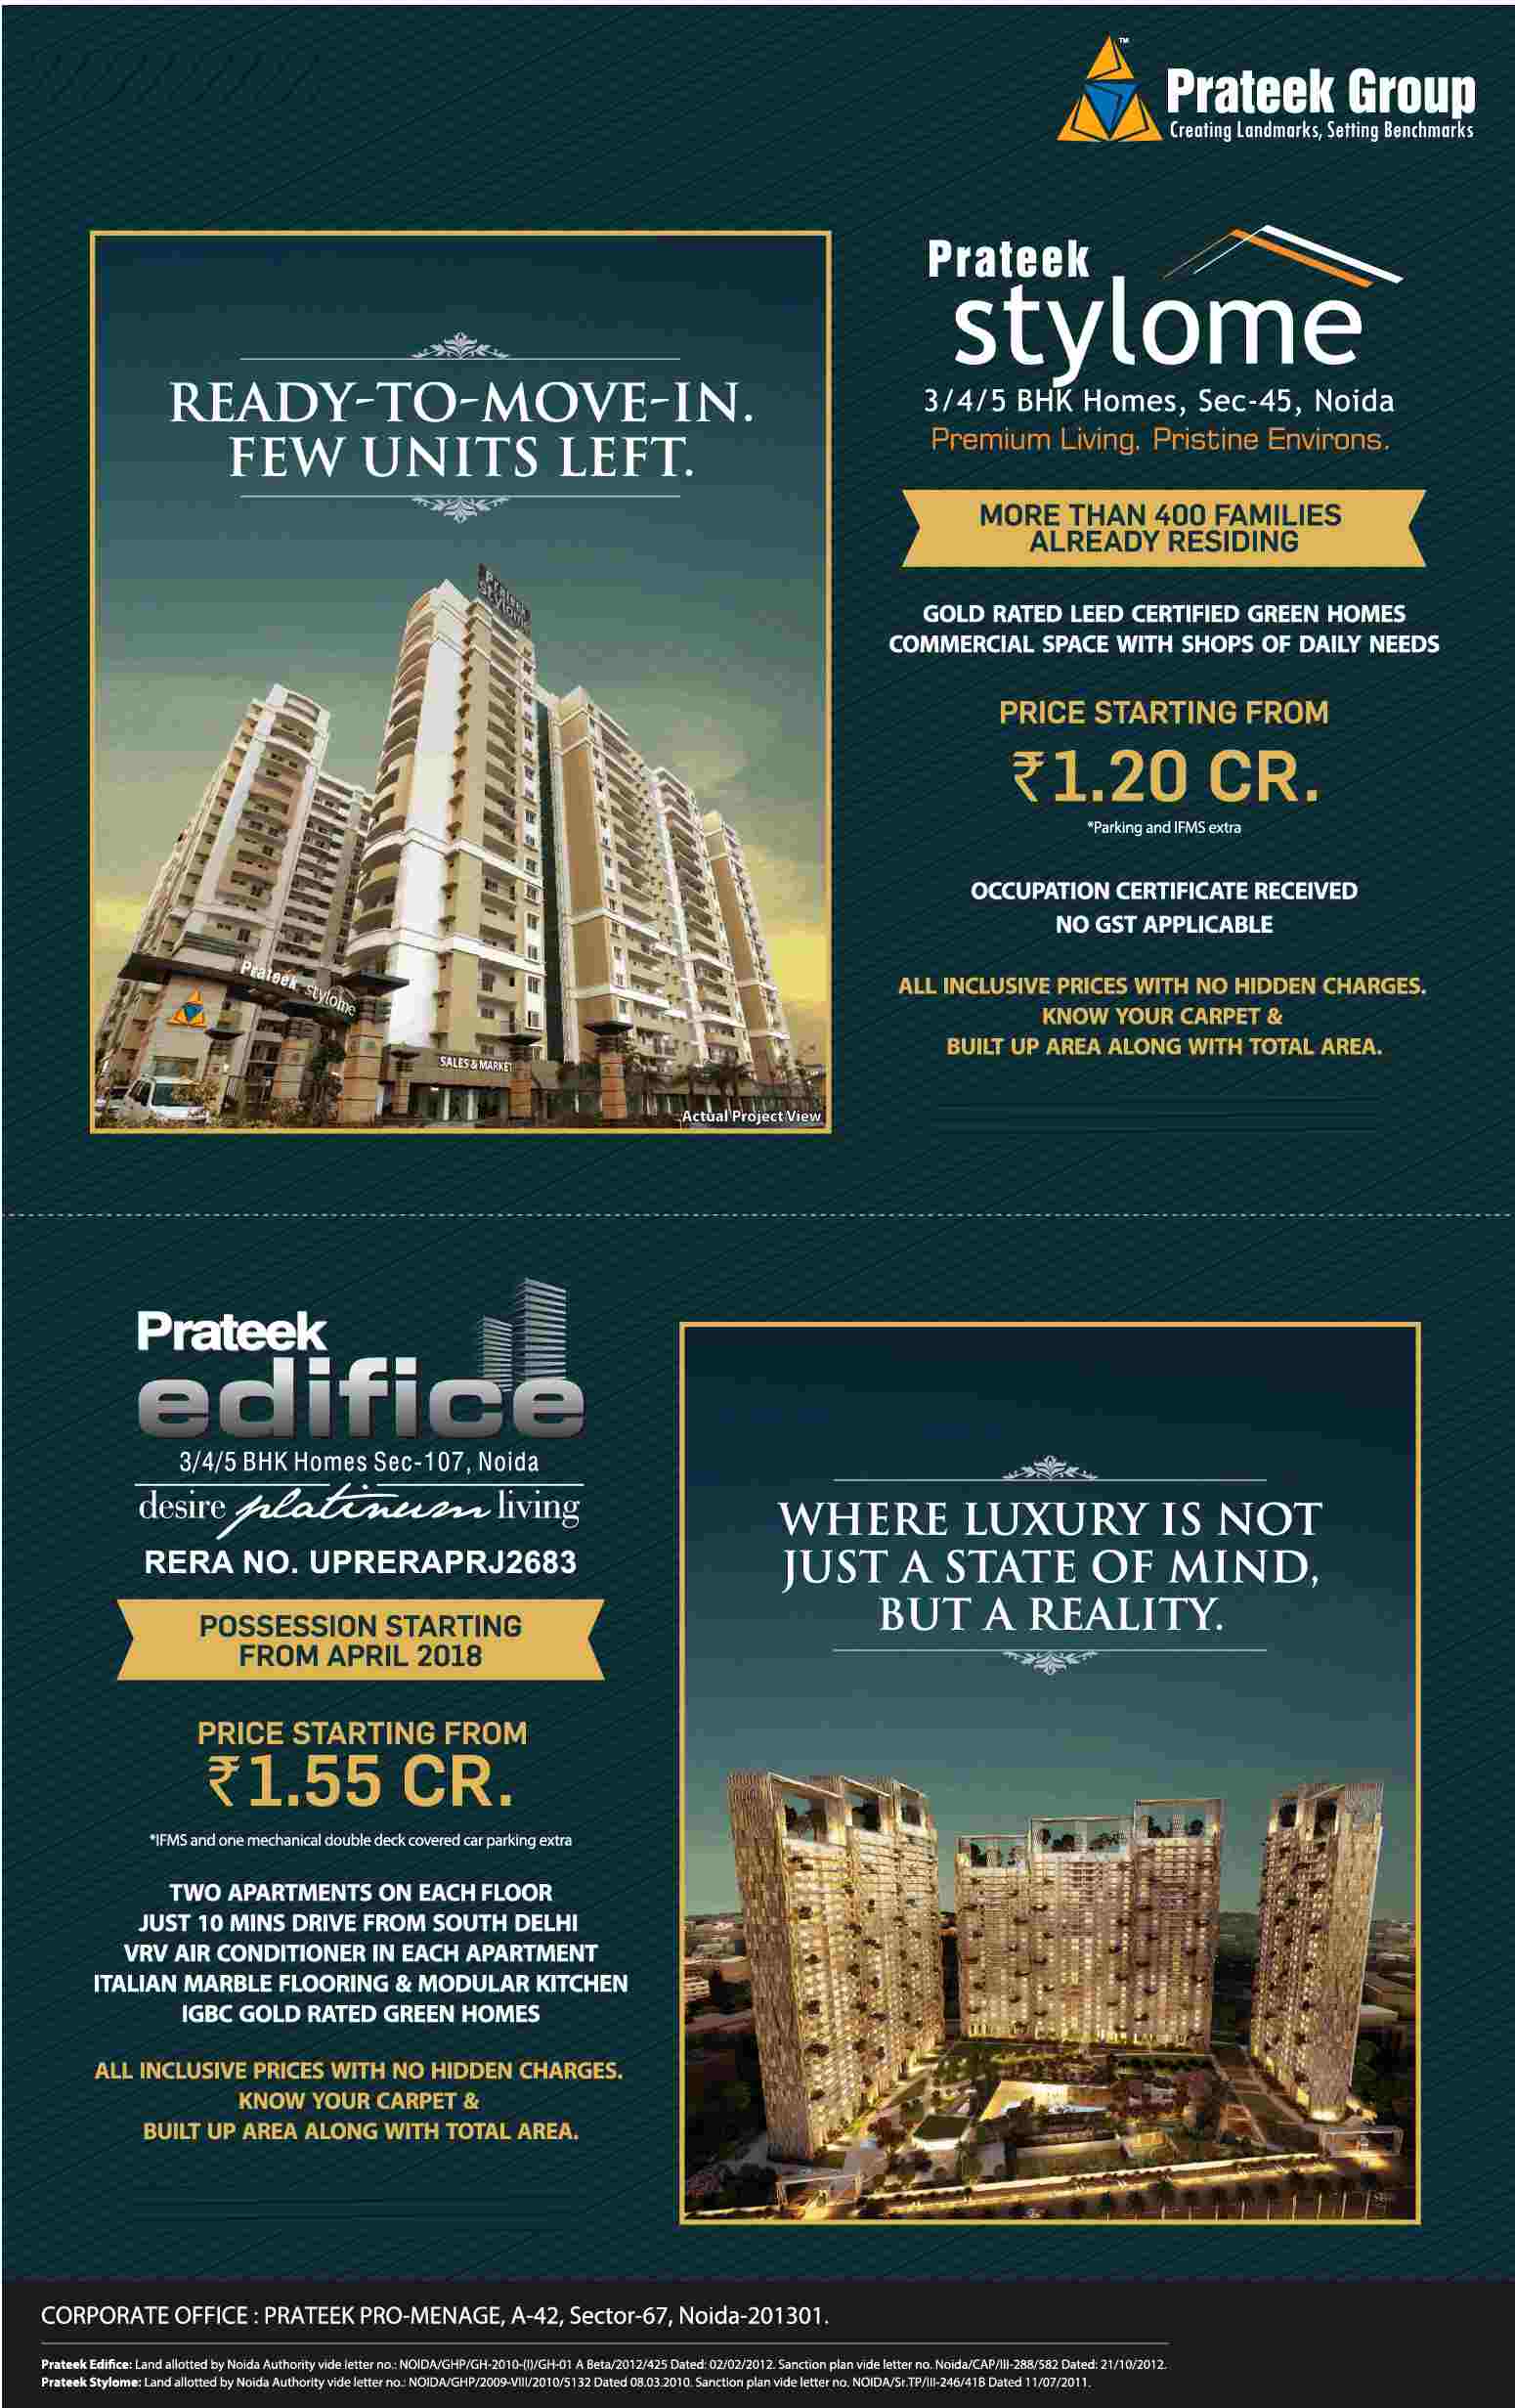 Invest in Prateek Properties & live a luxurious life in Noida Update